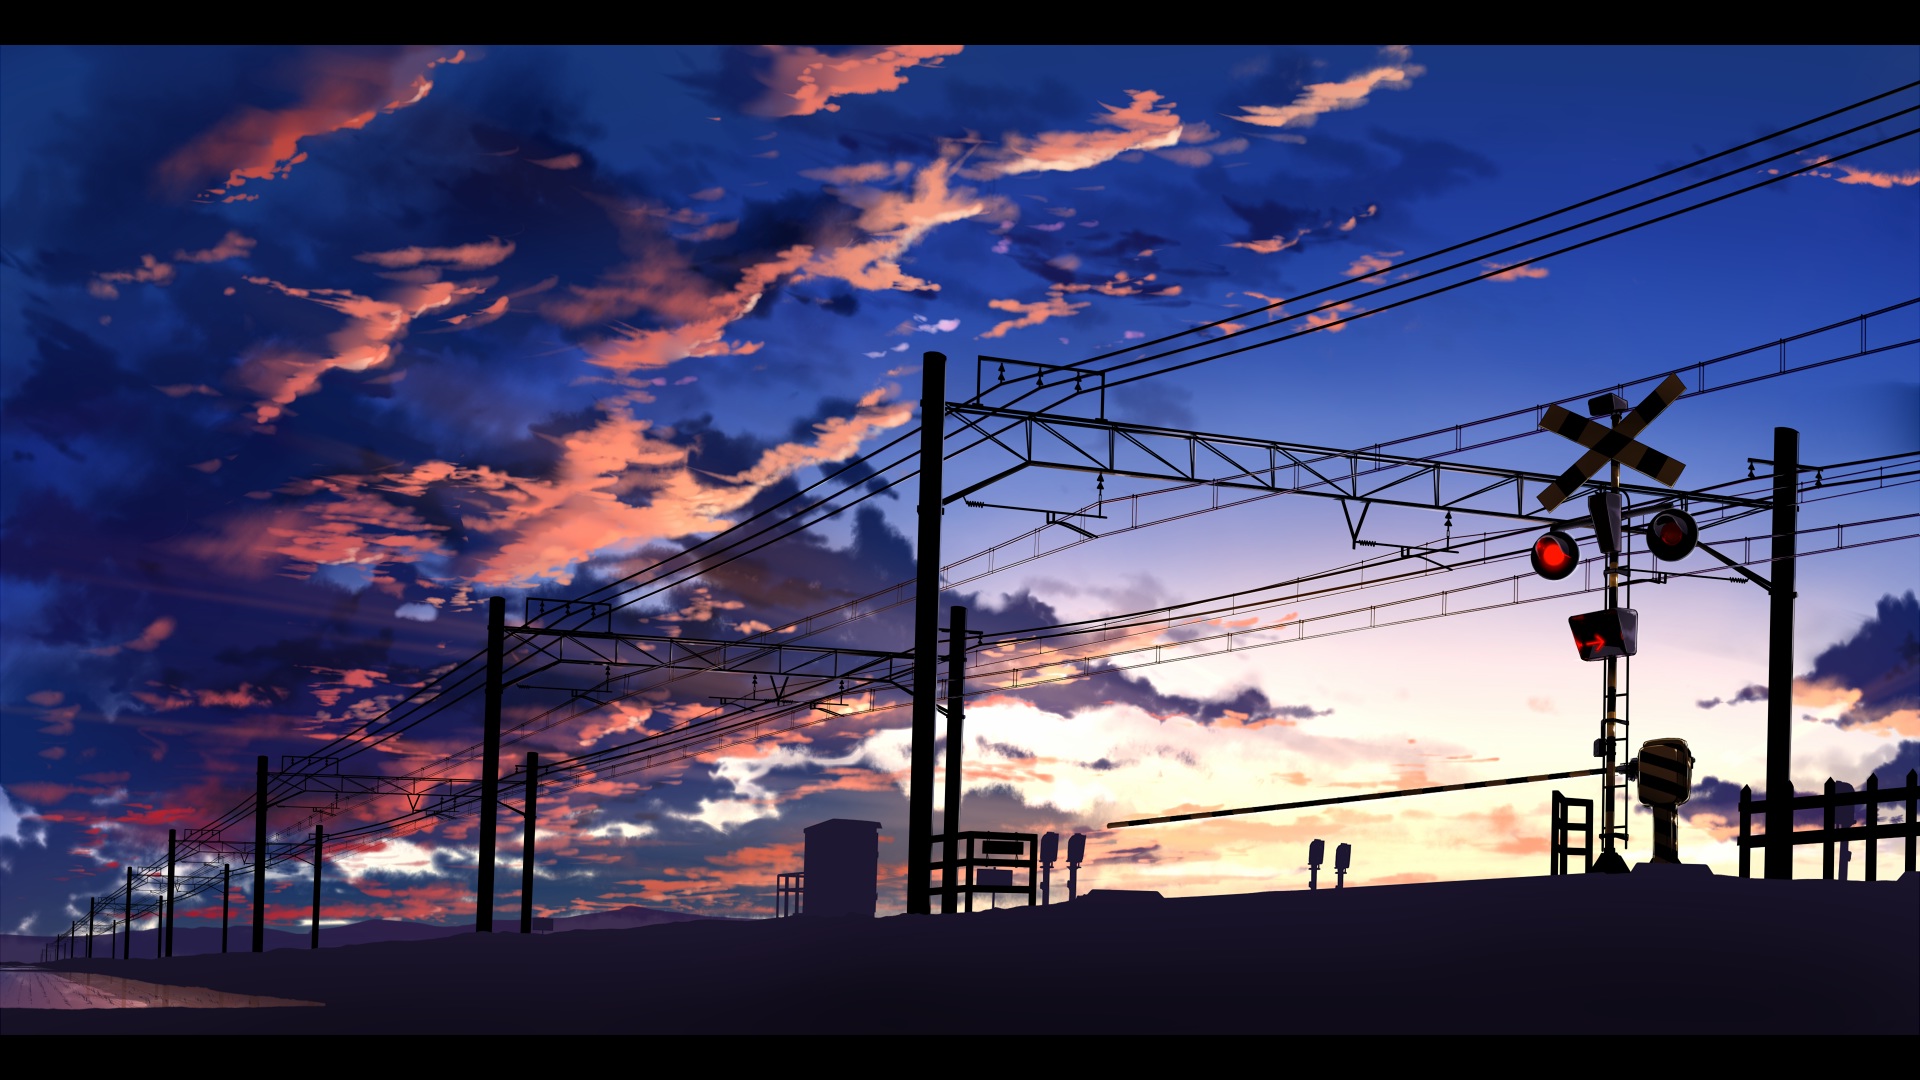 anime, Train Station, Power Lines, Clouds, Traffic Lights, Railway